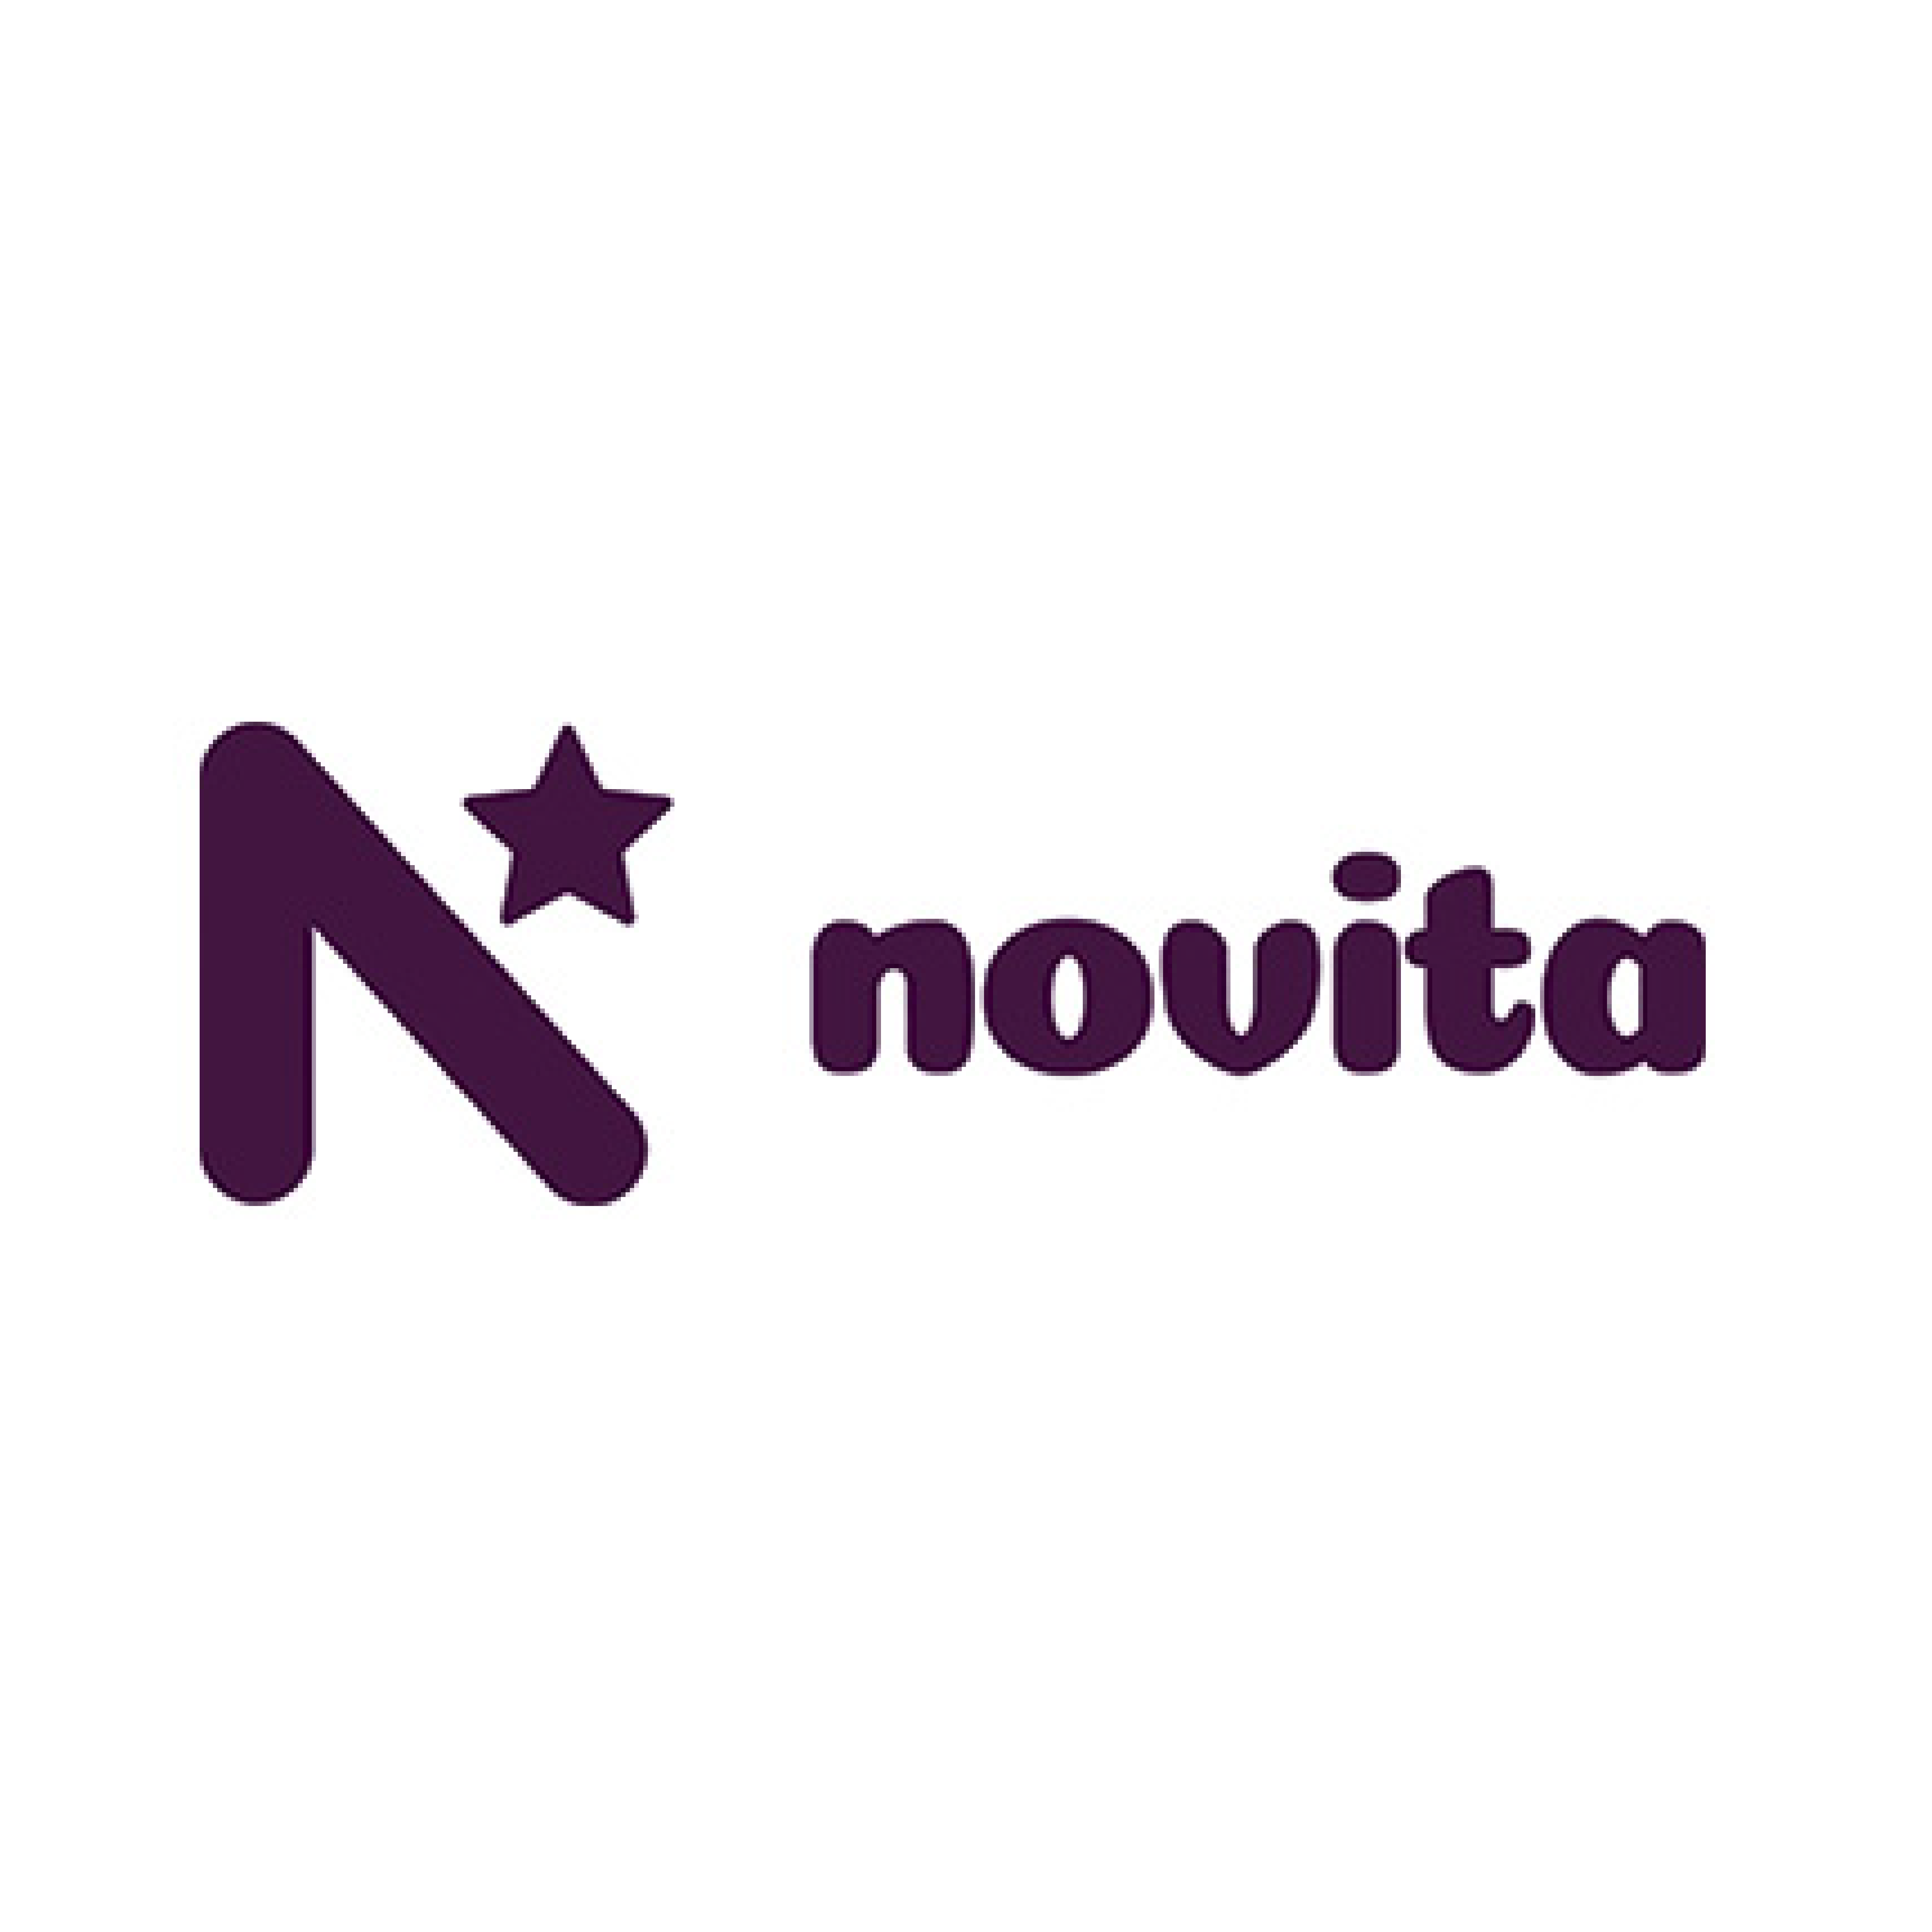 The novita logo.